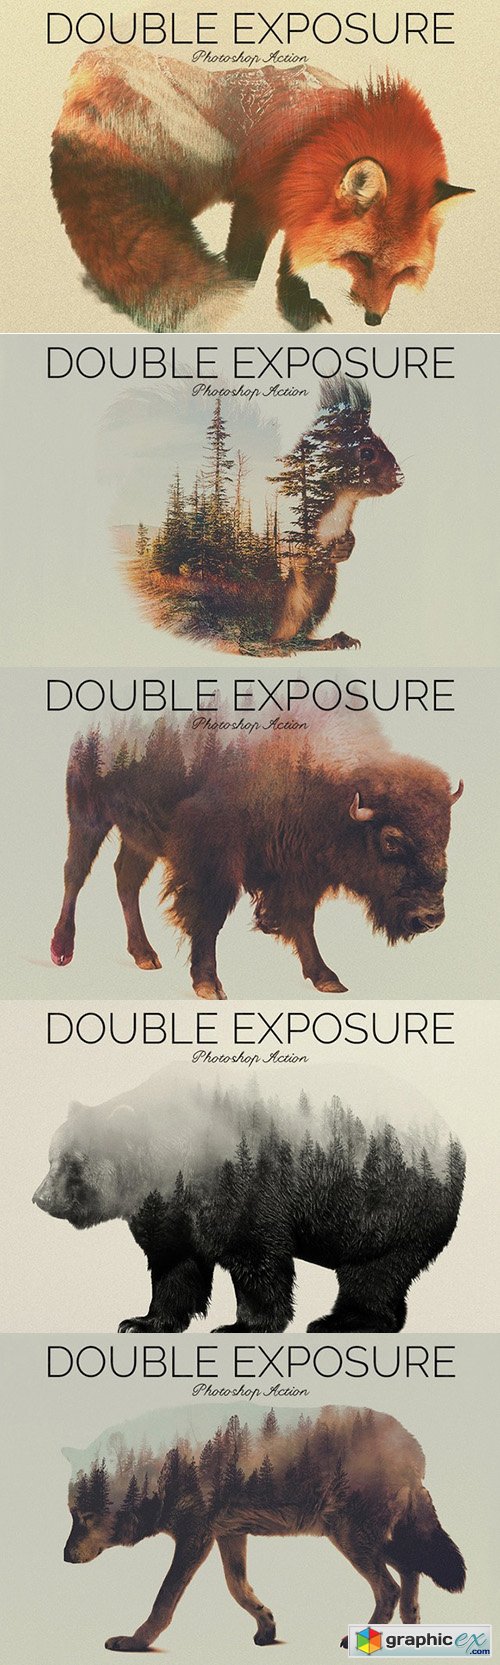 Double Exposure Photoshop Action 353229